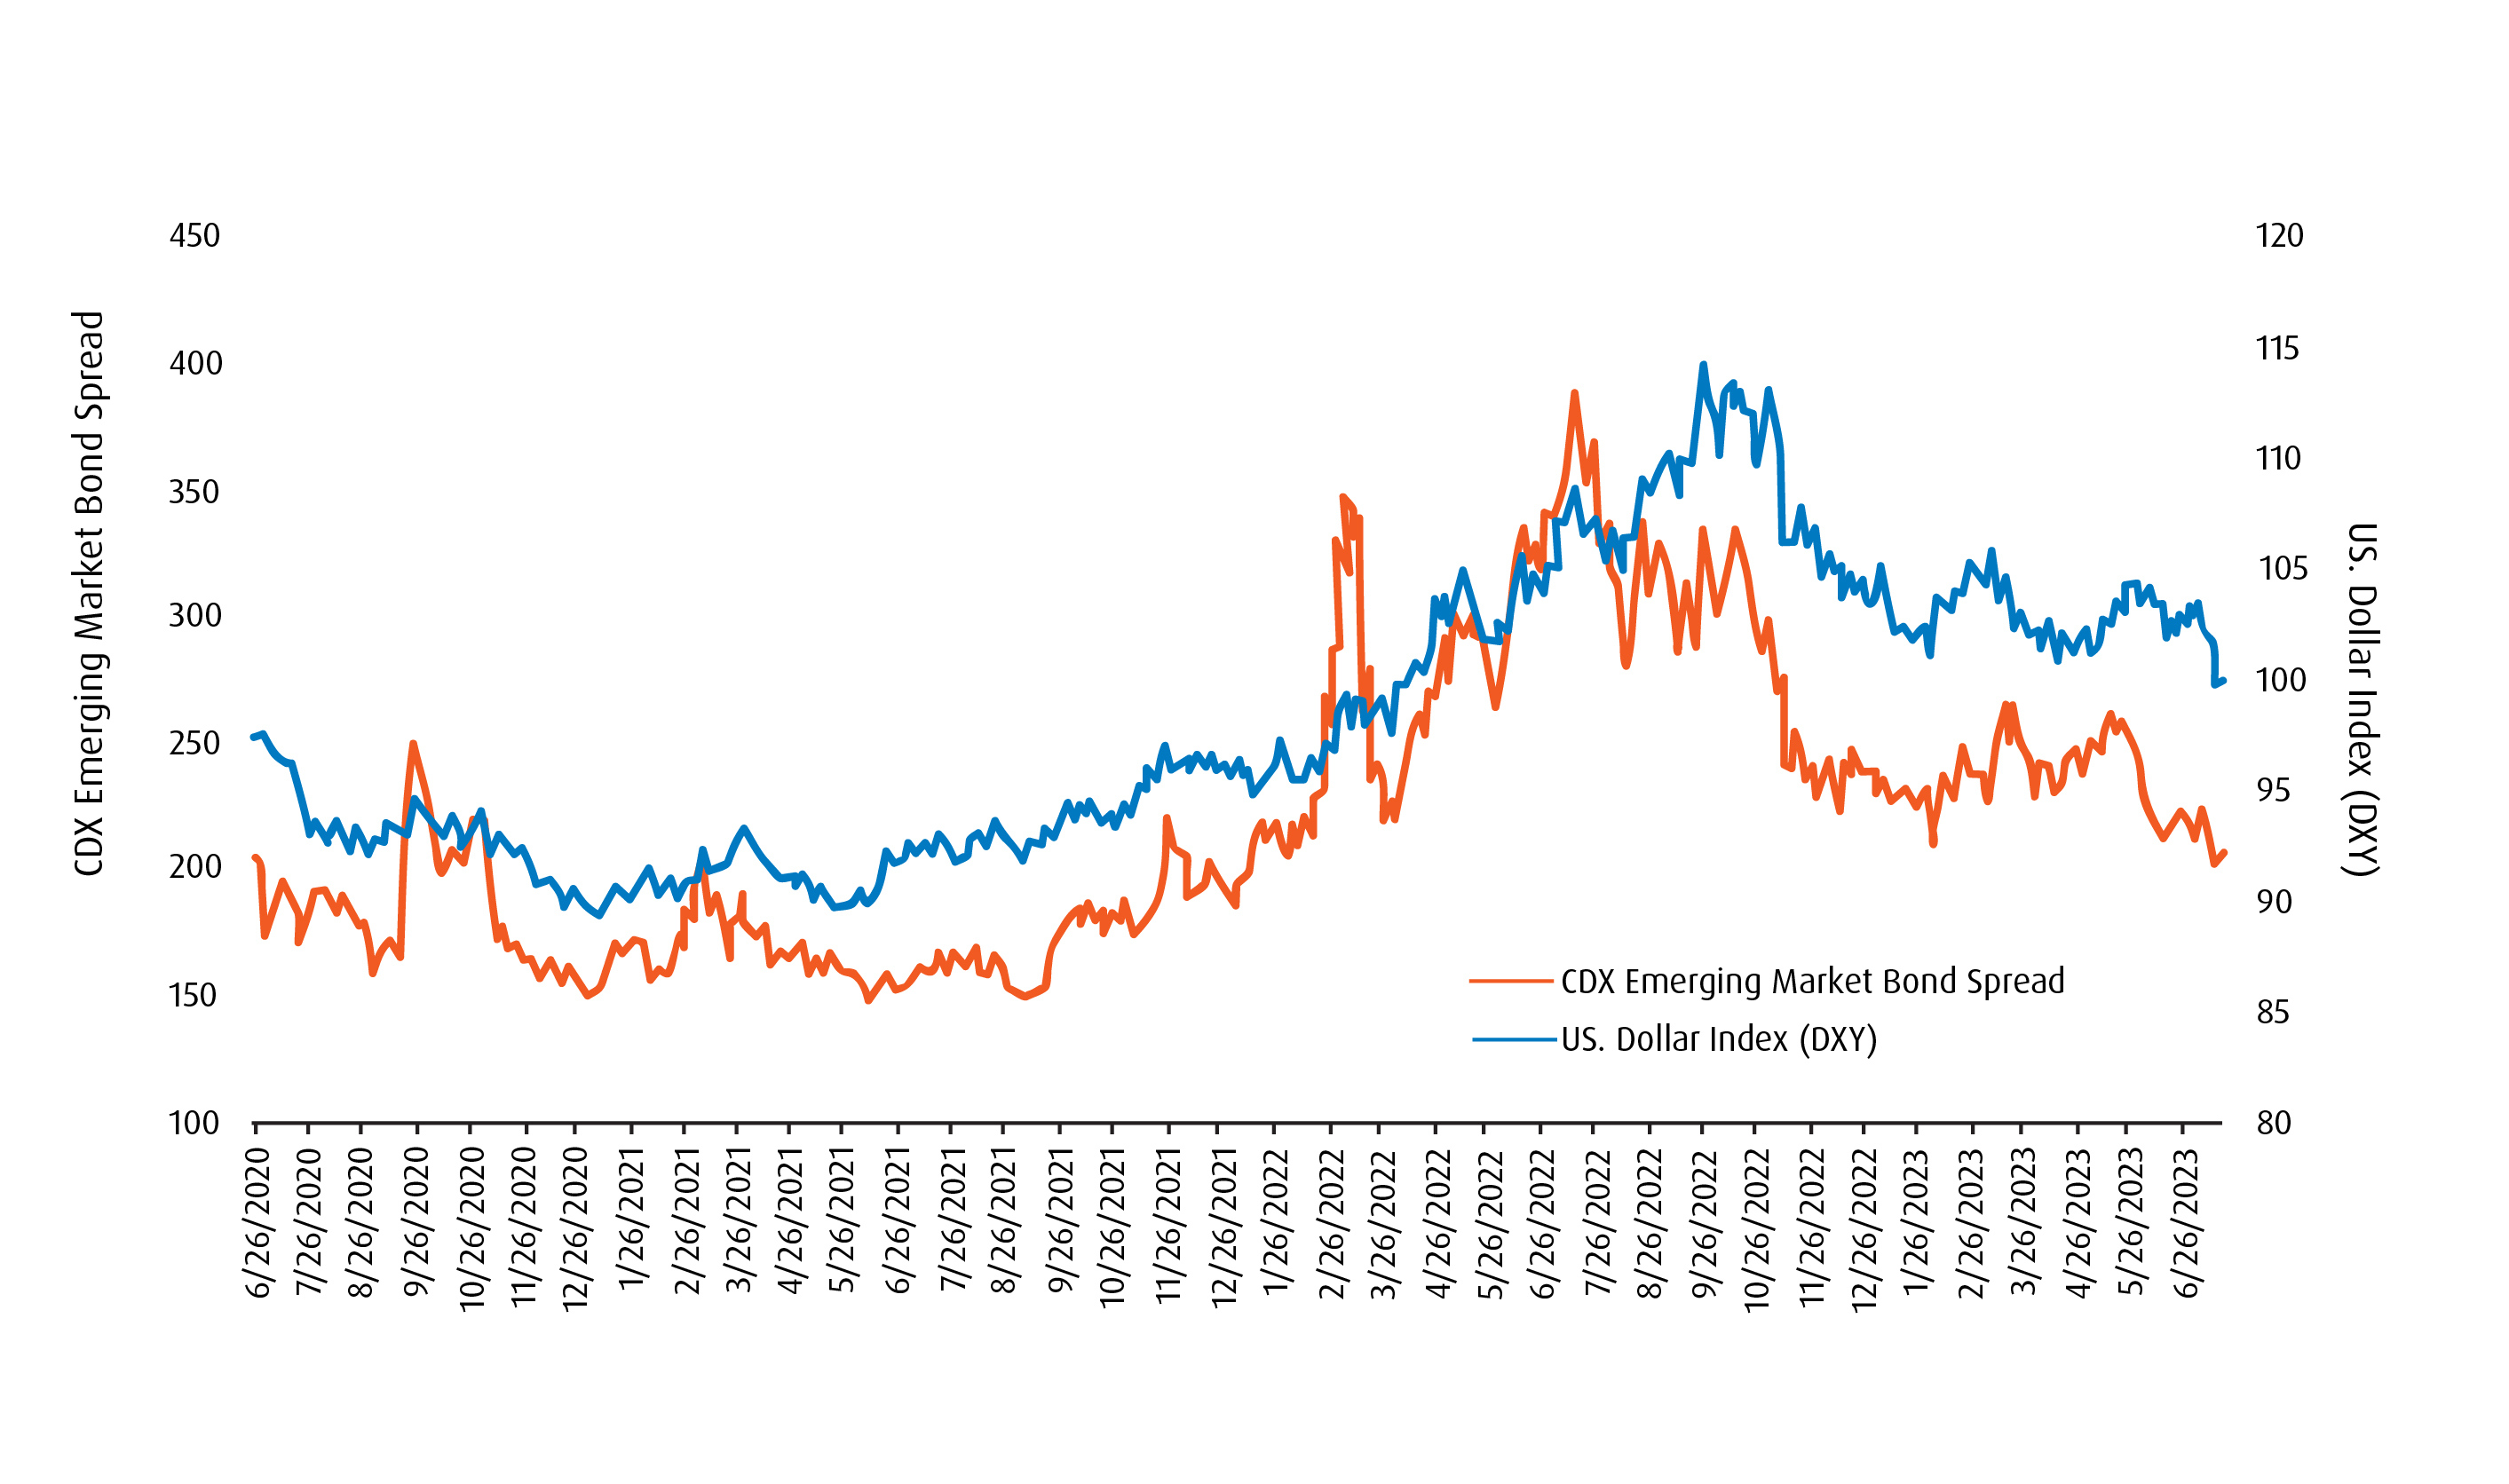 CDX Emerging Market Bond Spread vs. U.S. Dollar Index (DXY)